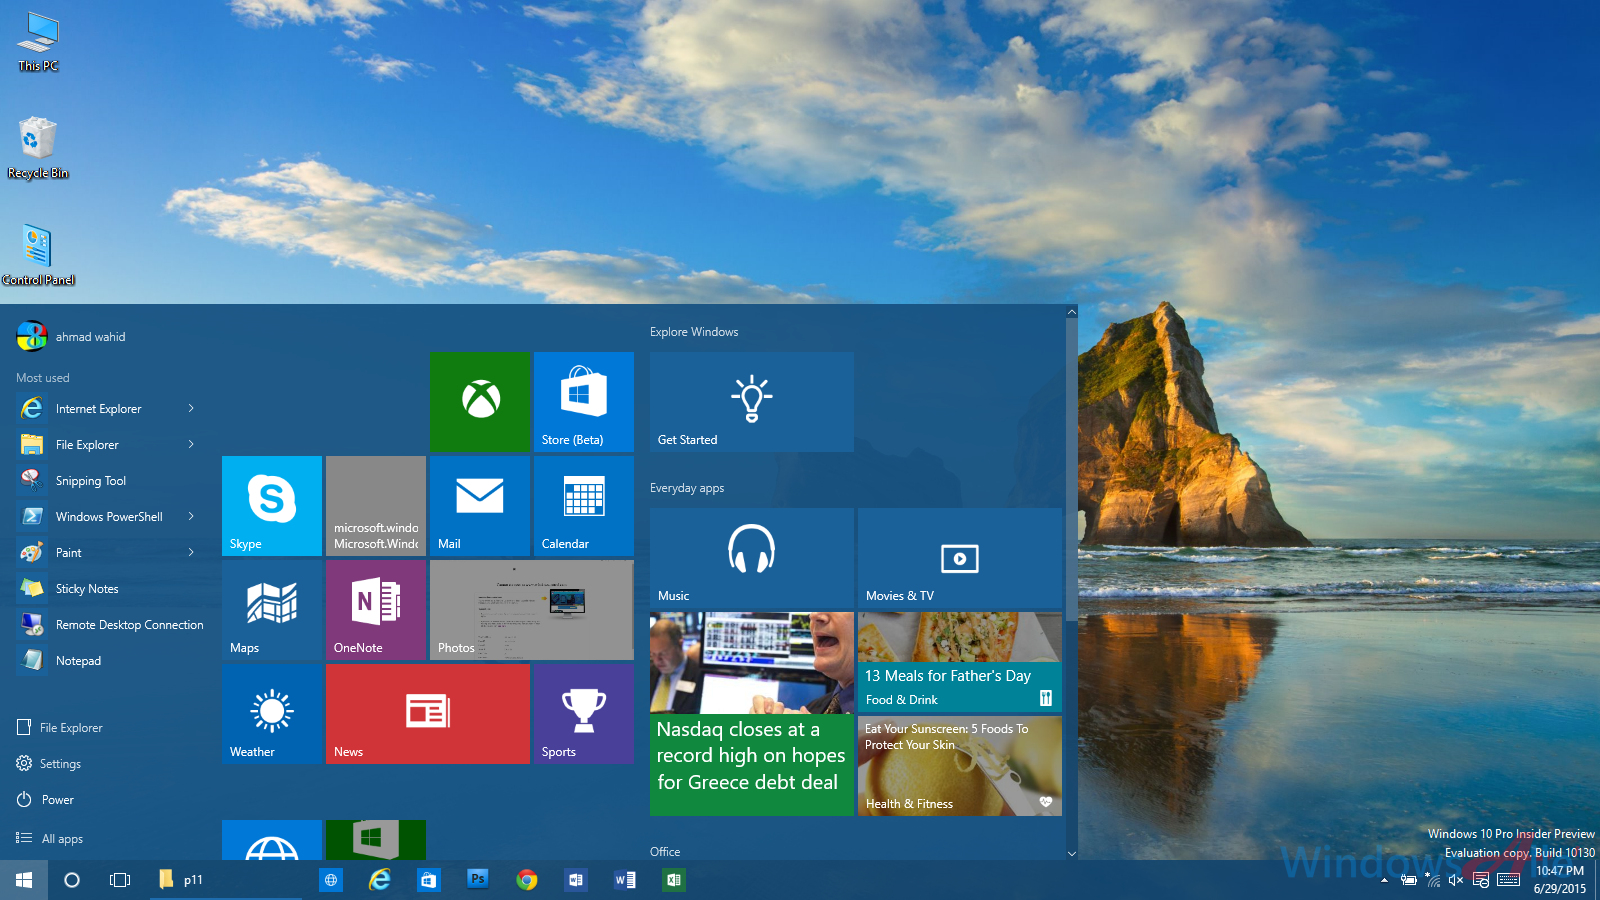 The New Desktop Wallpaper From Windows Build In HD